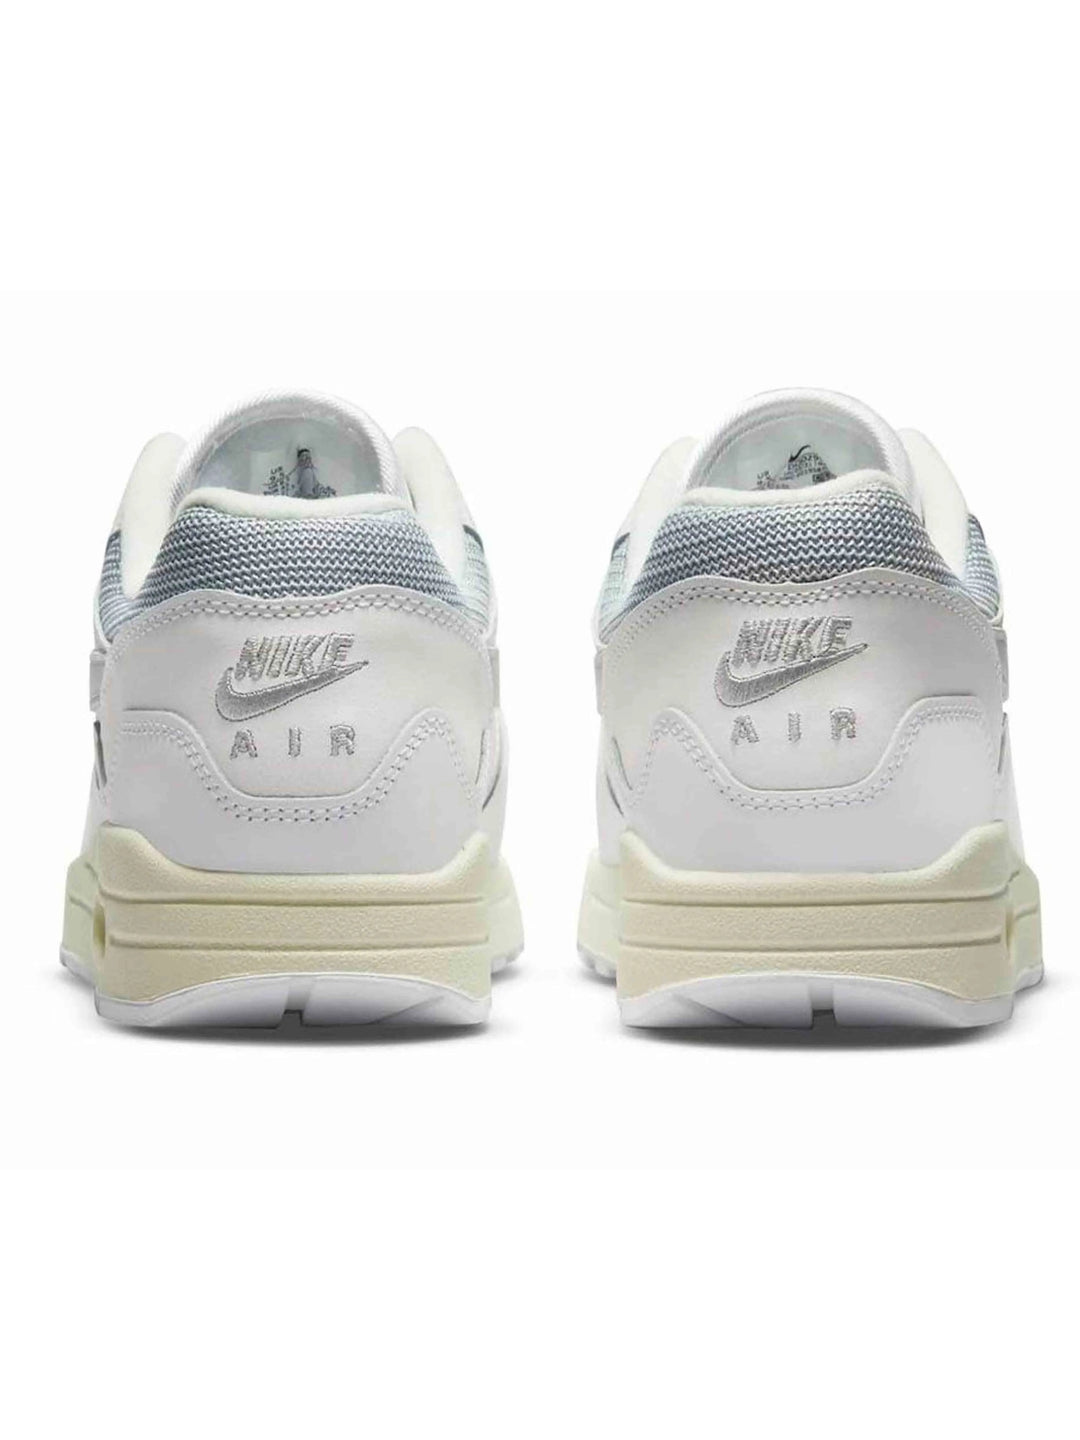 Nike Air Max 1 Patta Waves White Prior